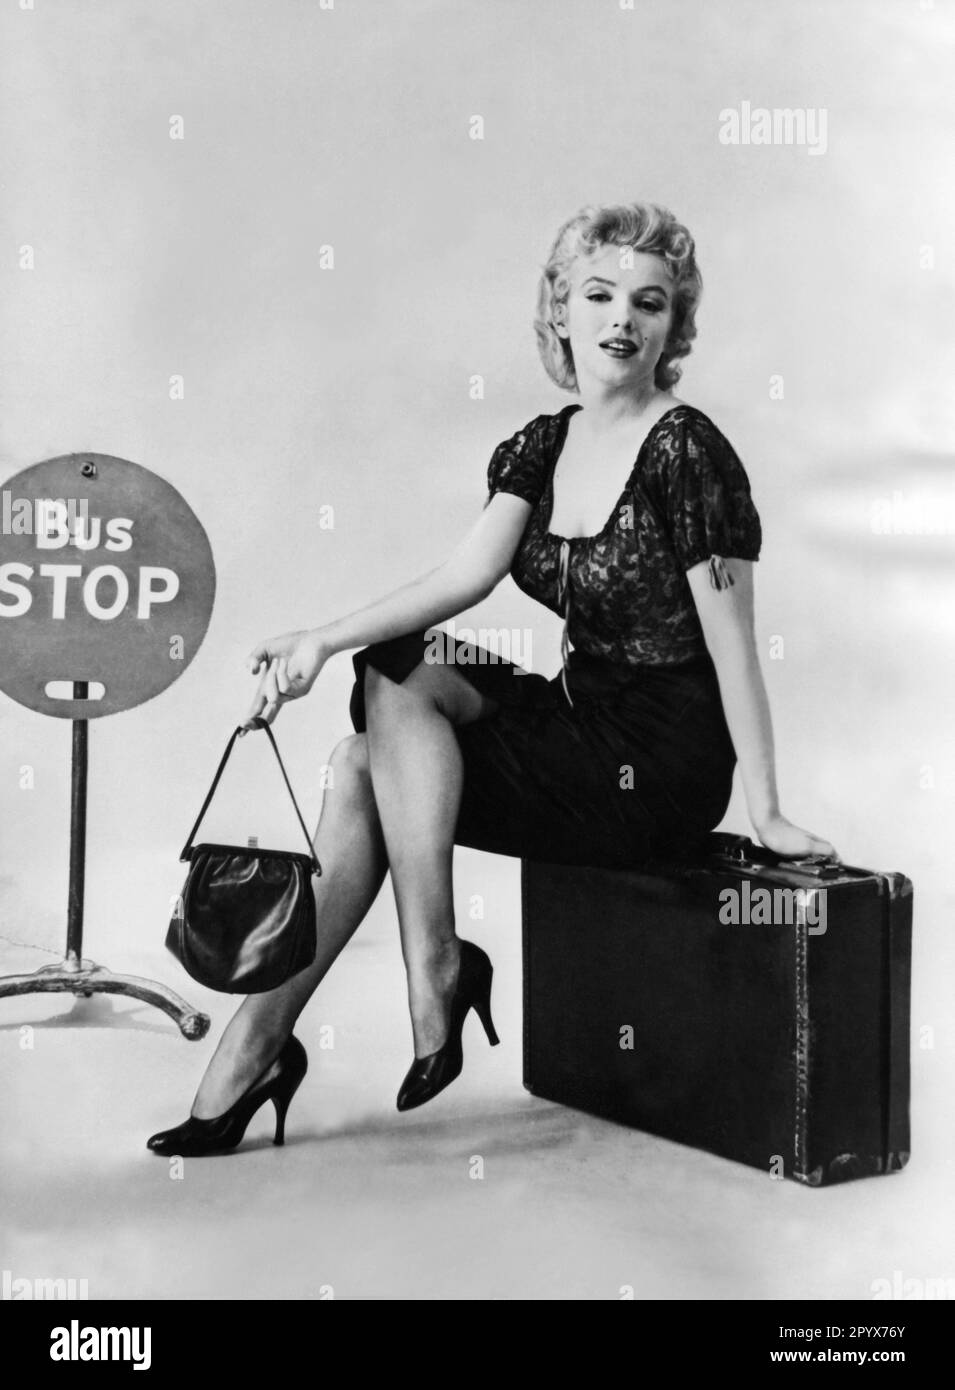 Marilyn Monroe handbag Stock Photo - Alamy